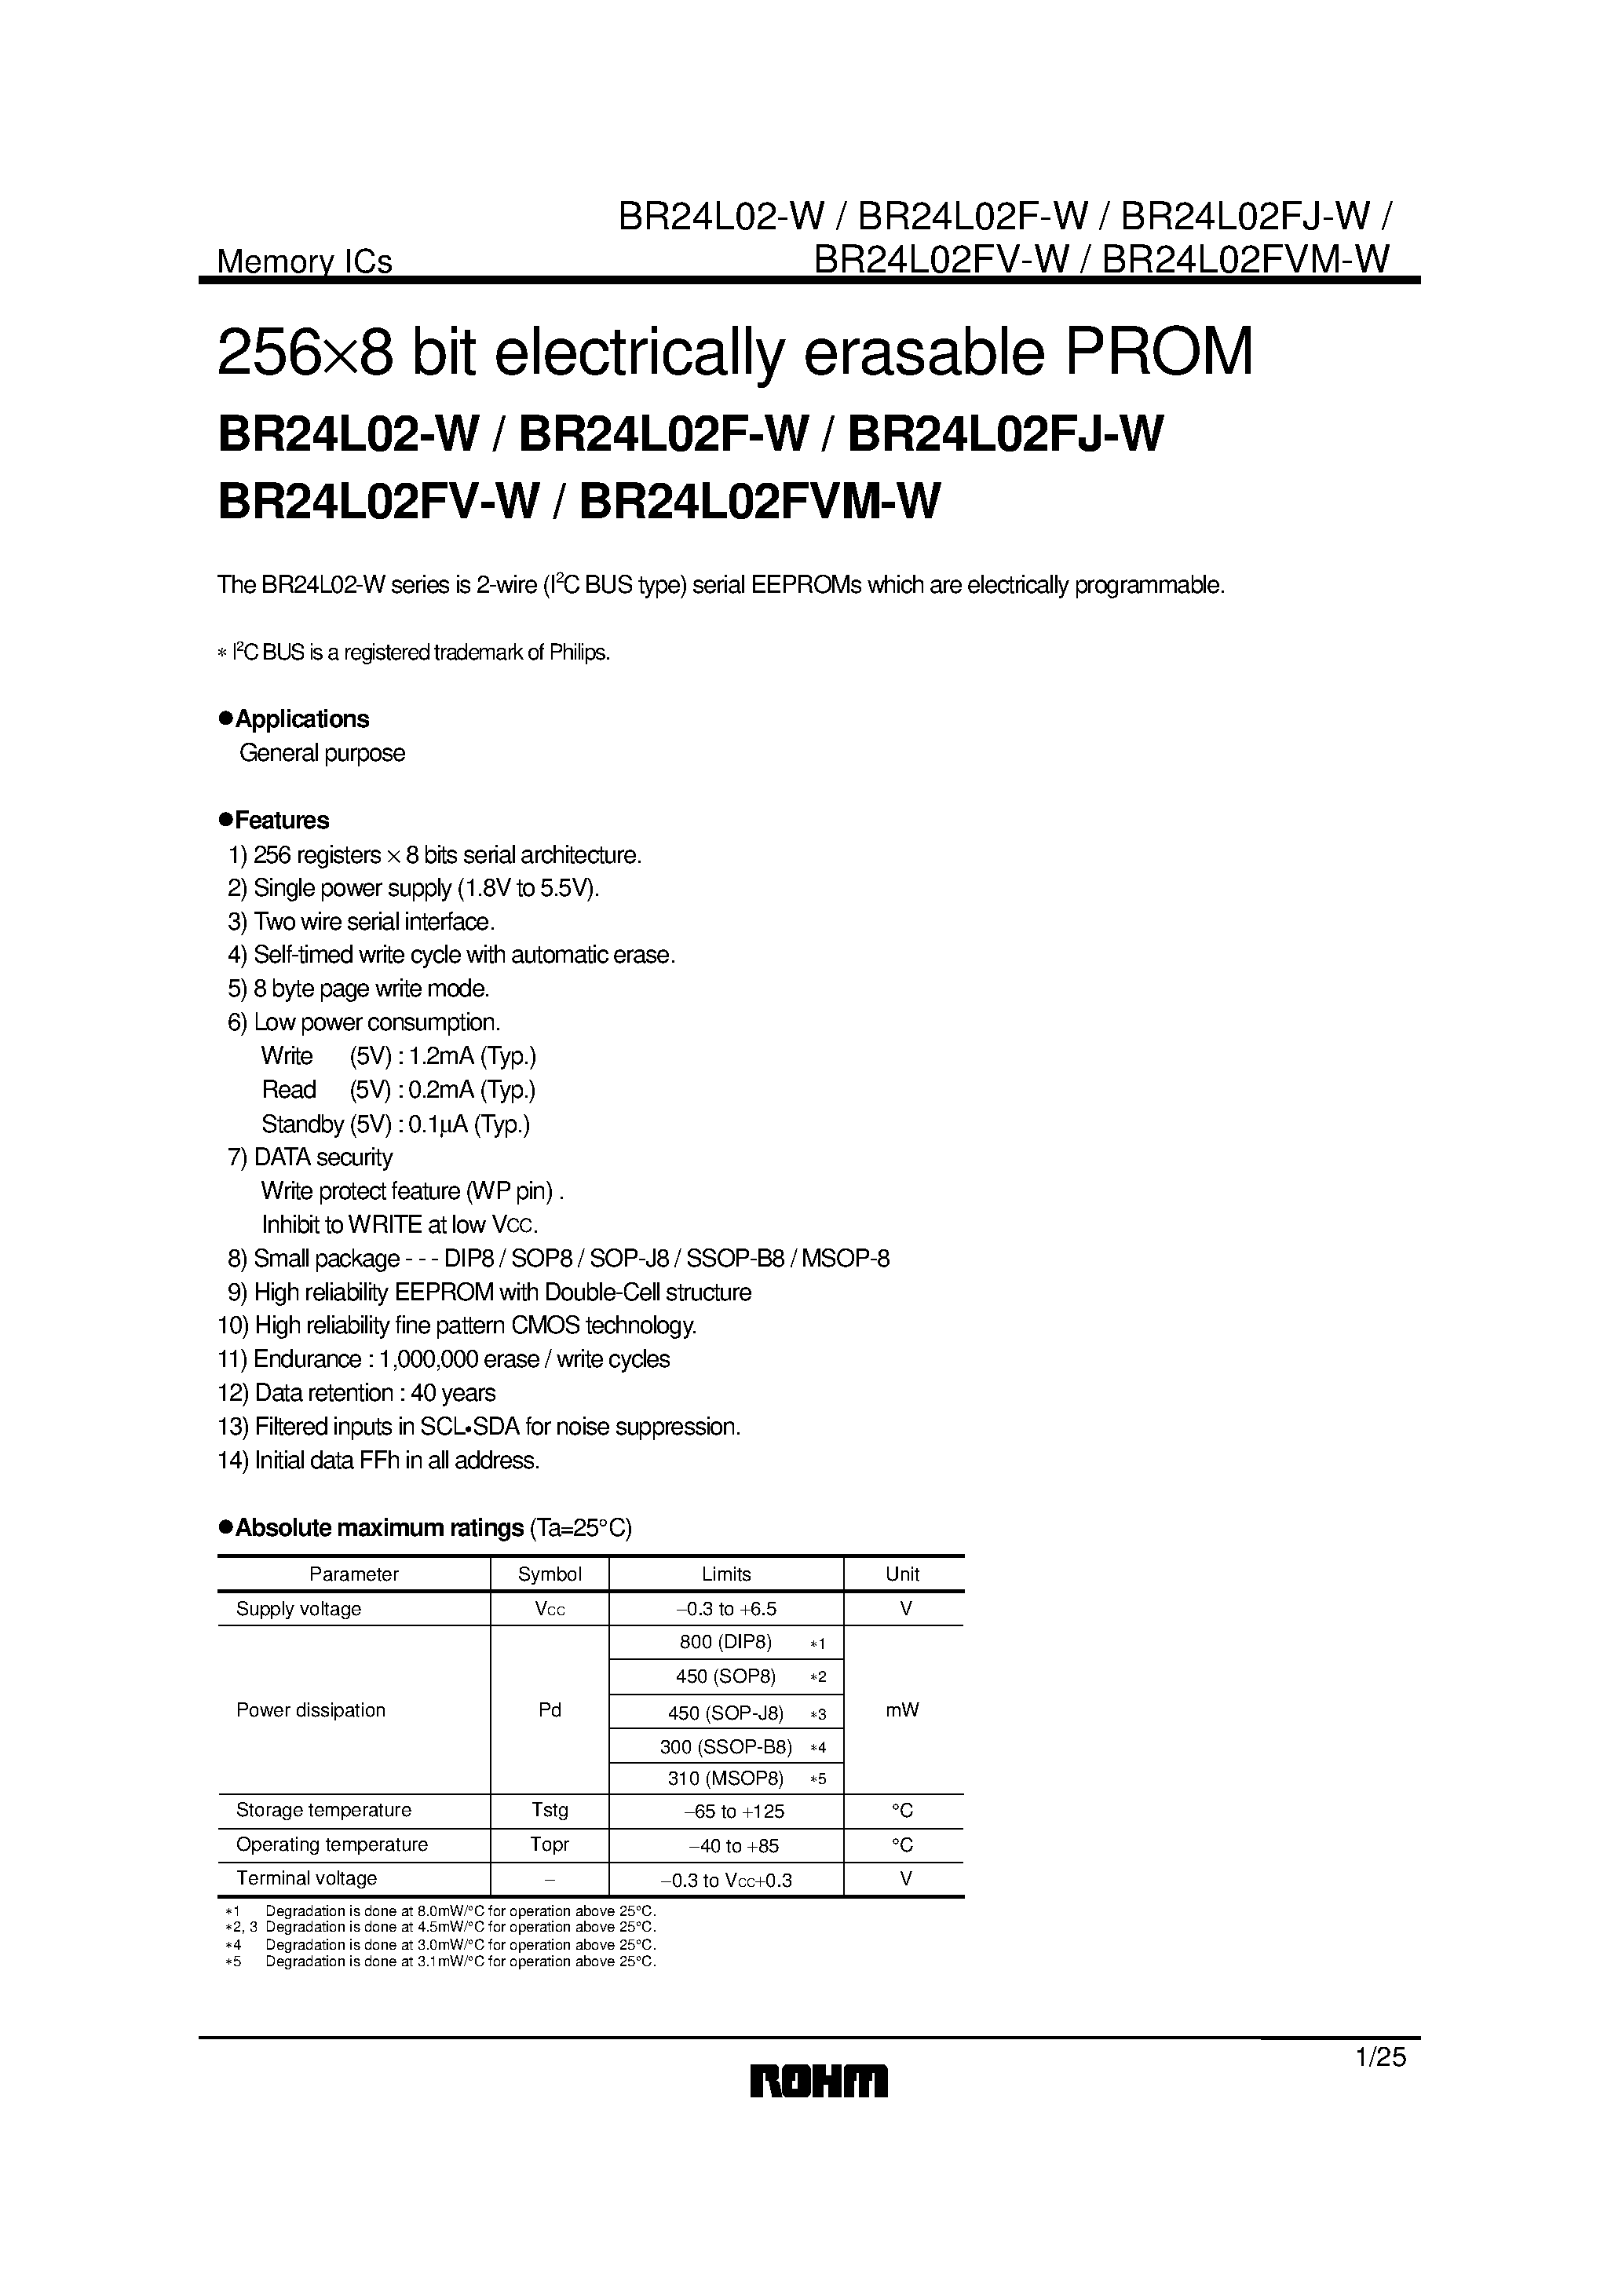 Datasheet BR24L02F-W - 256x8 bit electrically erasable PROM page 1